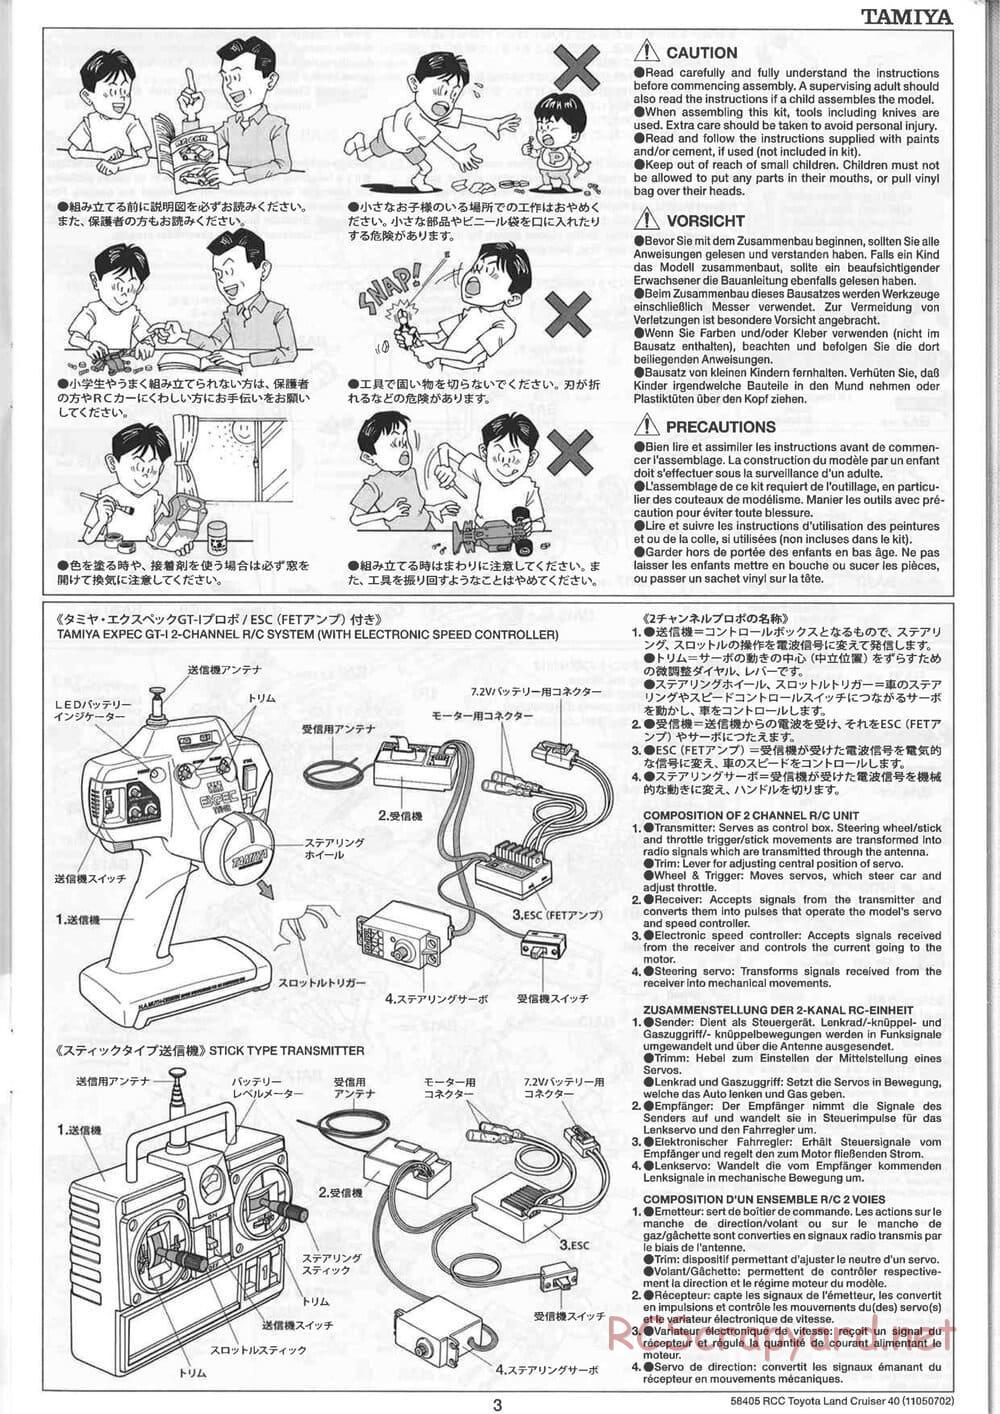 Tamiya - Toyota Land Cruiser 40 - CR-01 Chassis - Manual - Page 3